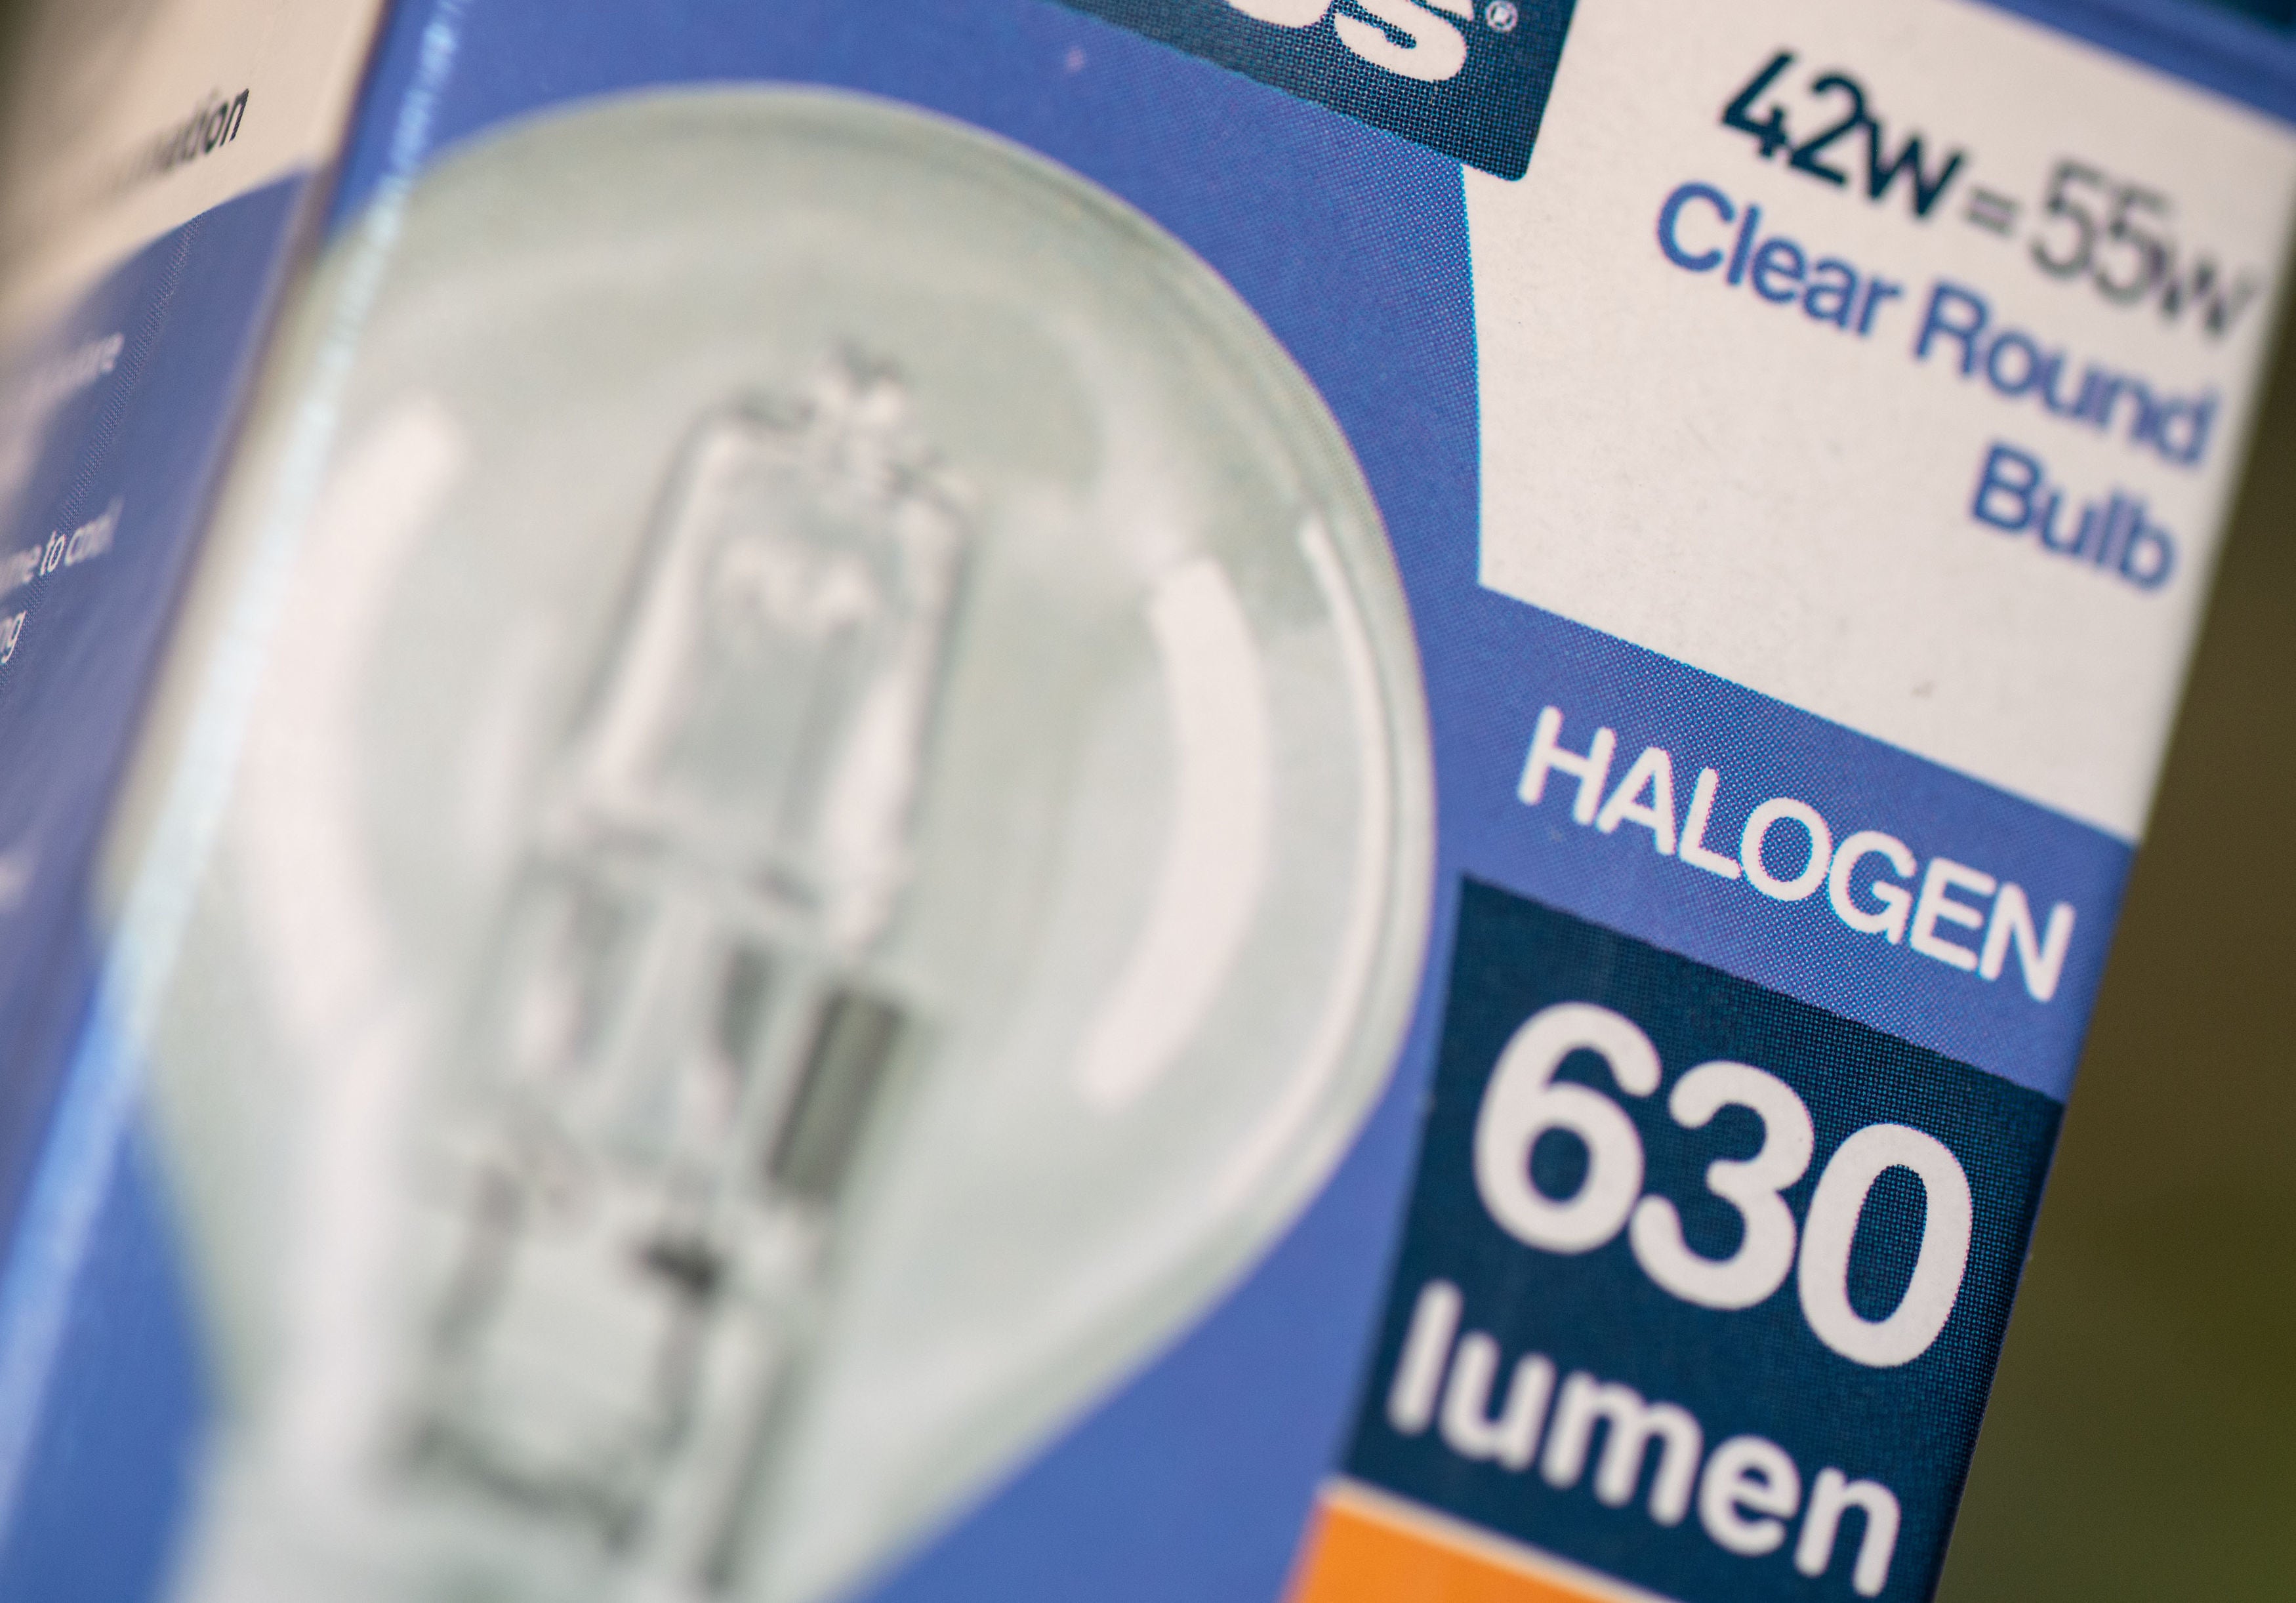 LED lights last five times longer than traditional halogen bulbs